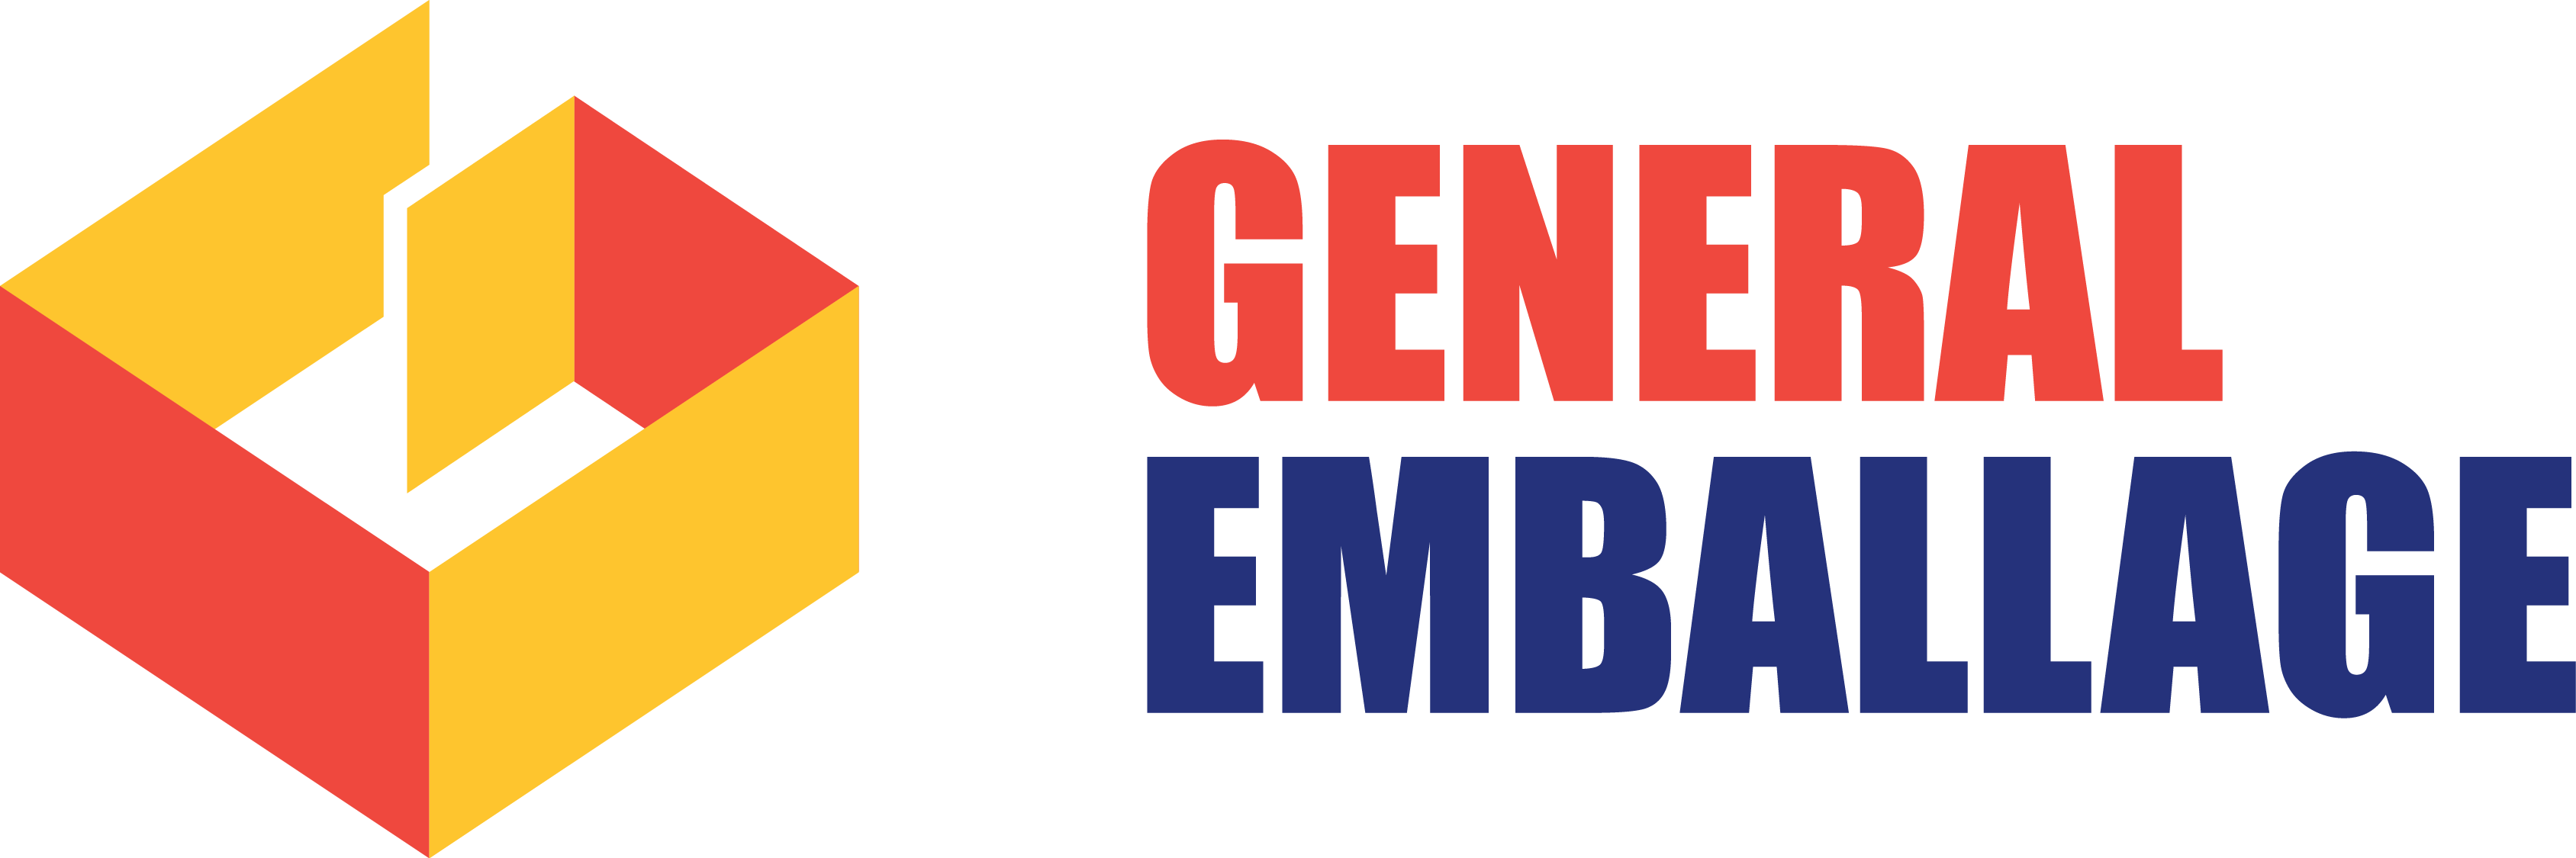 general-emballage.png